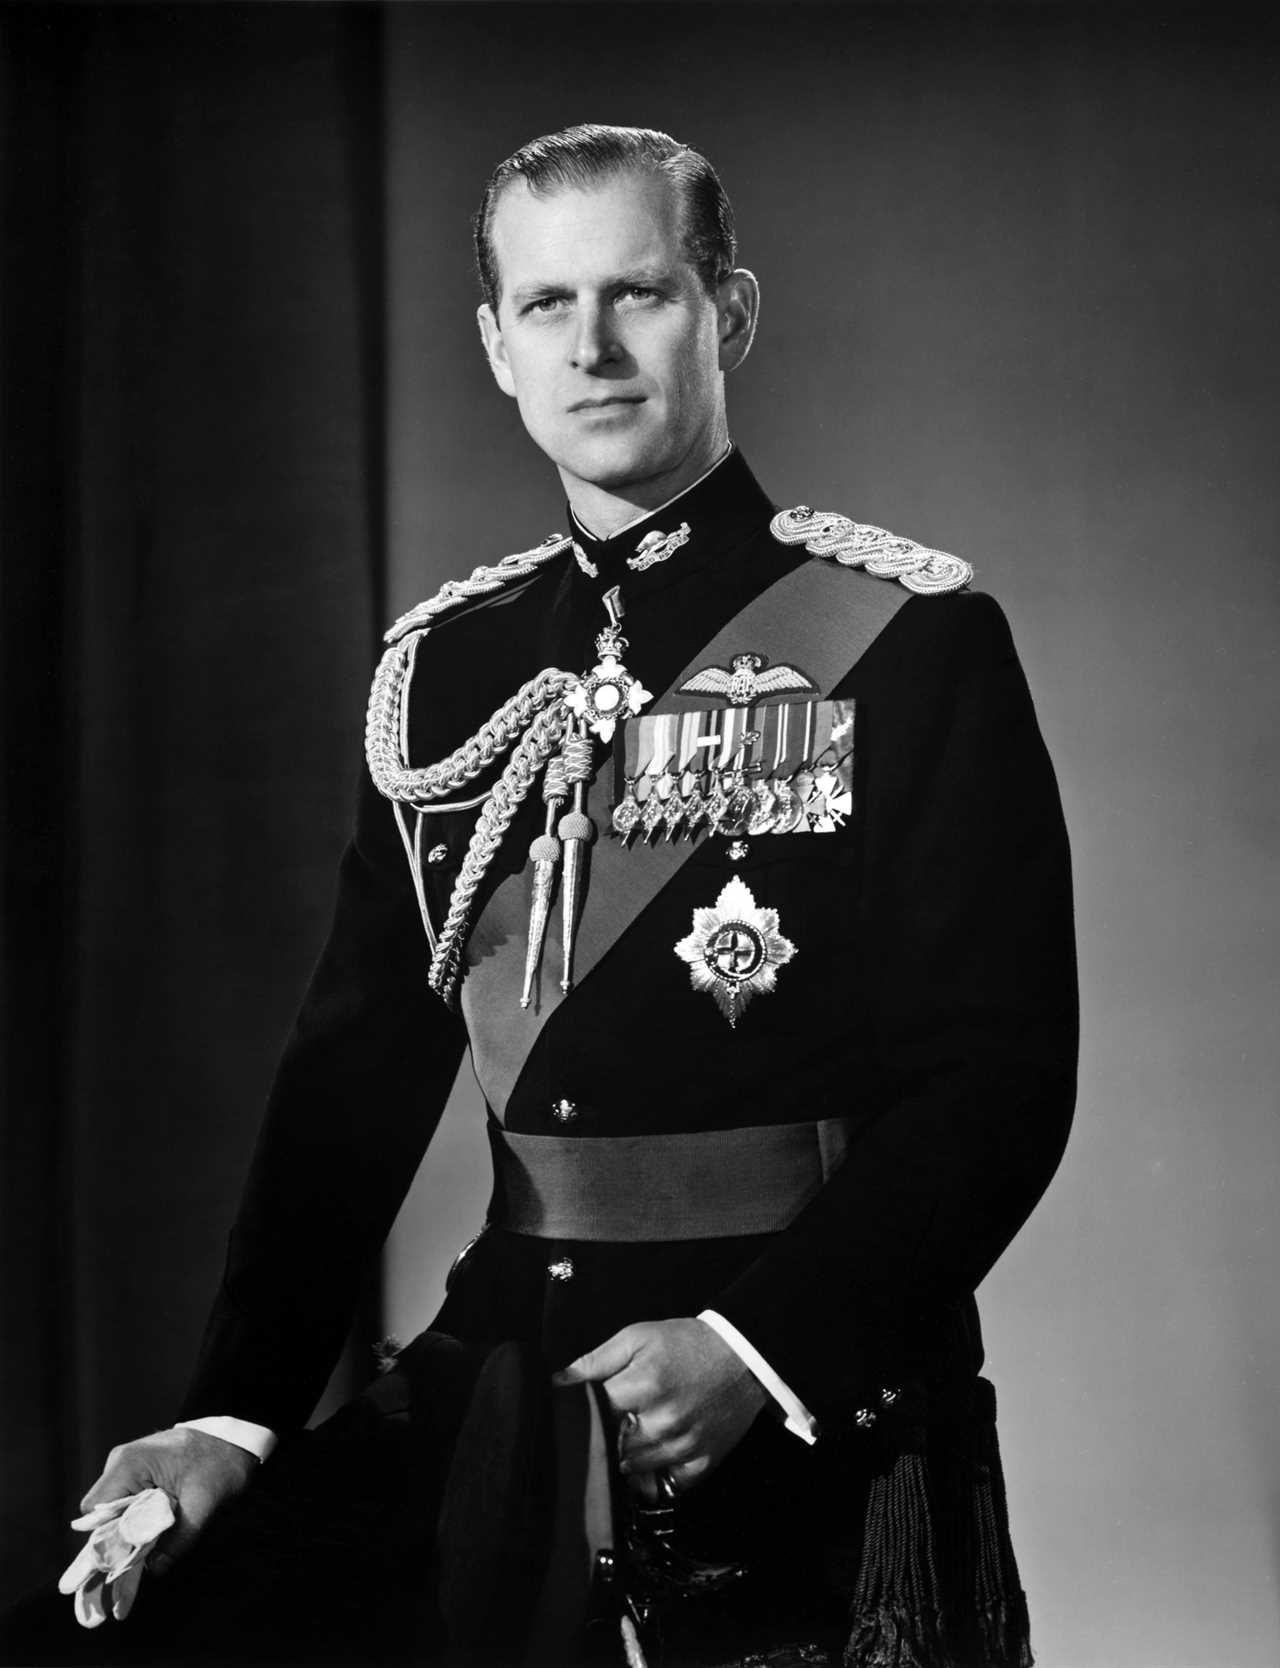 Philip was Britain's longest serving consort